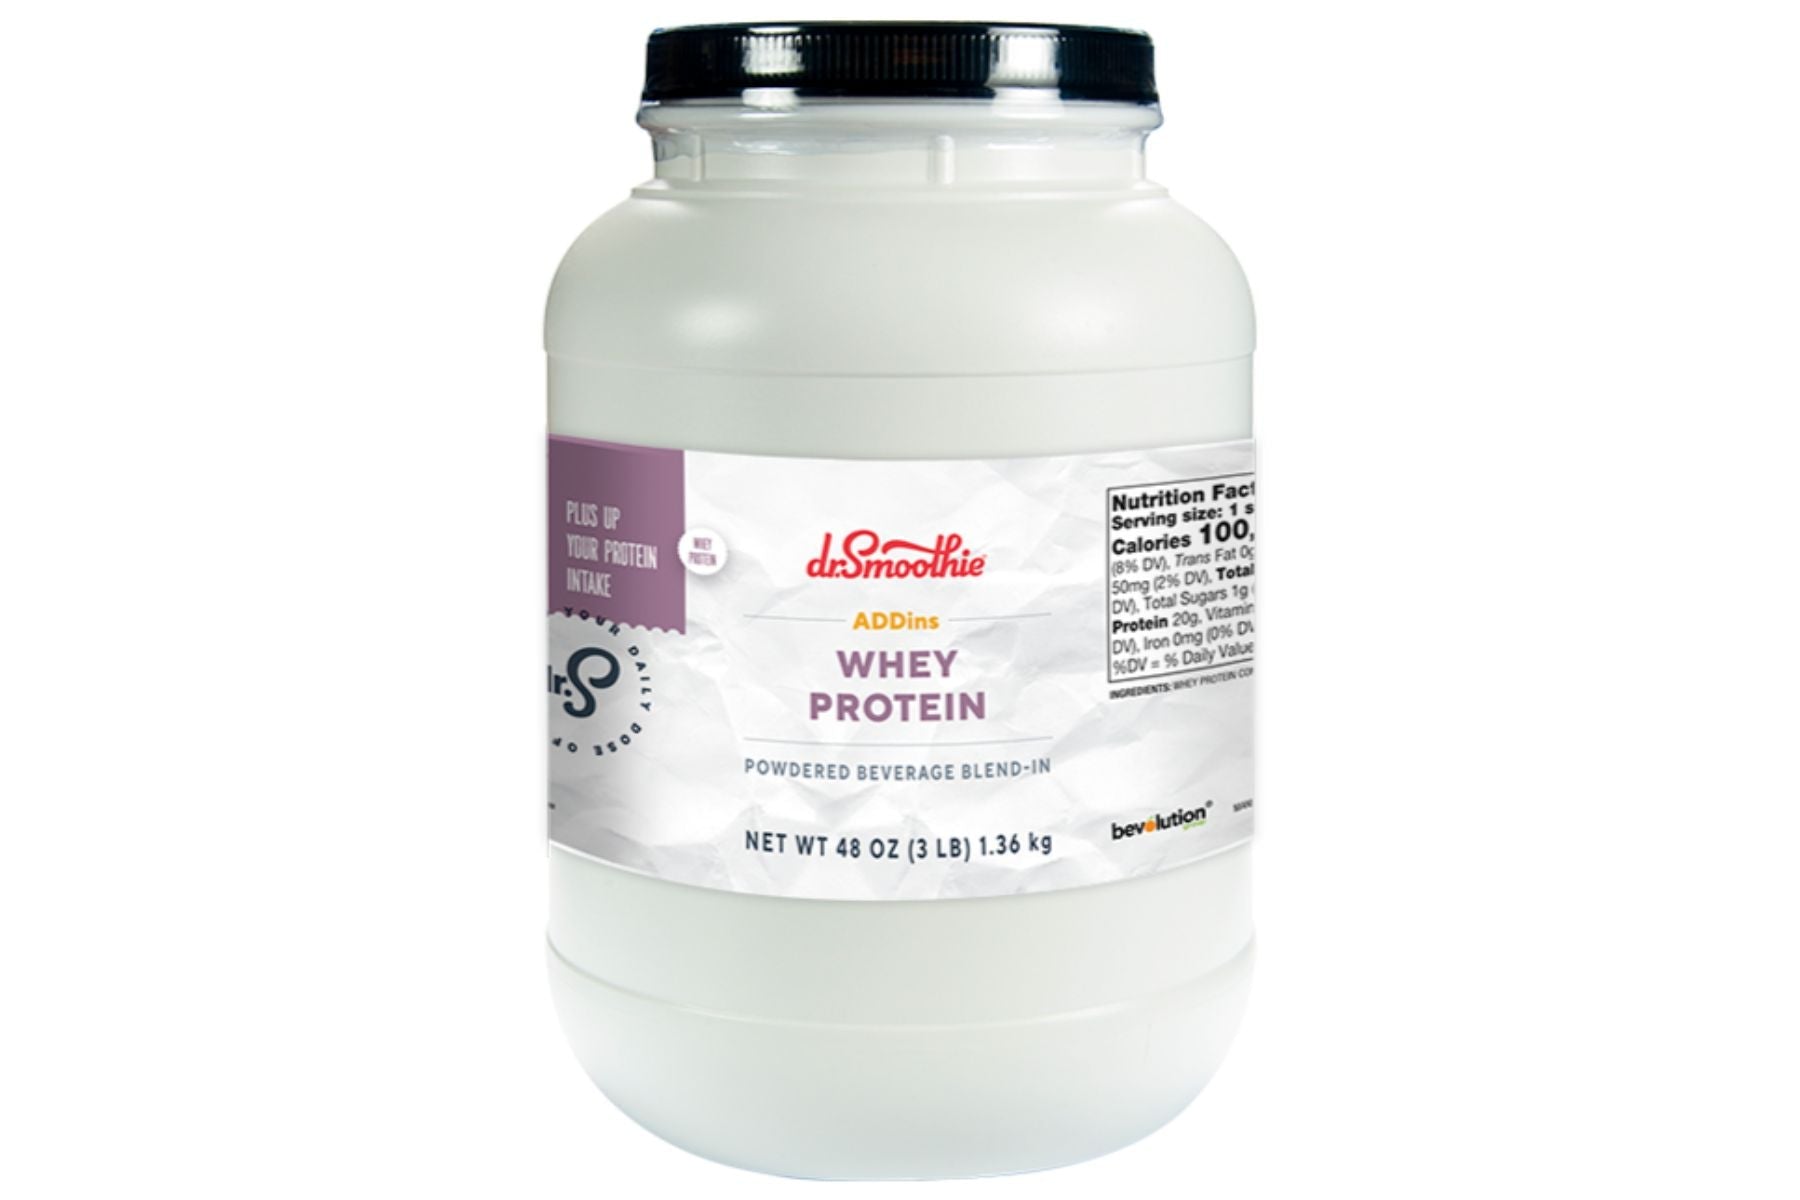 Dr. Smoothie ADDins - 48oz (3 lb) Jug: Whey Protein